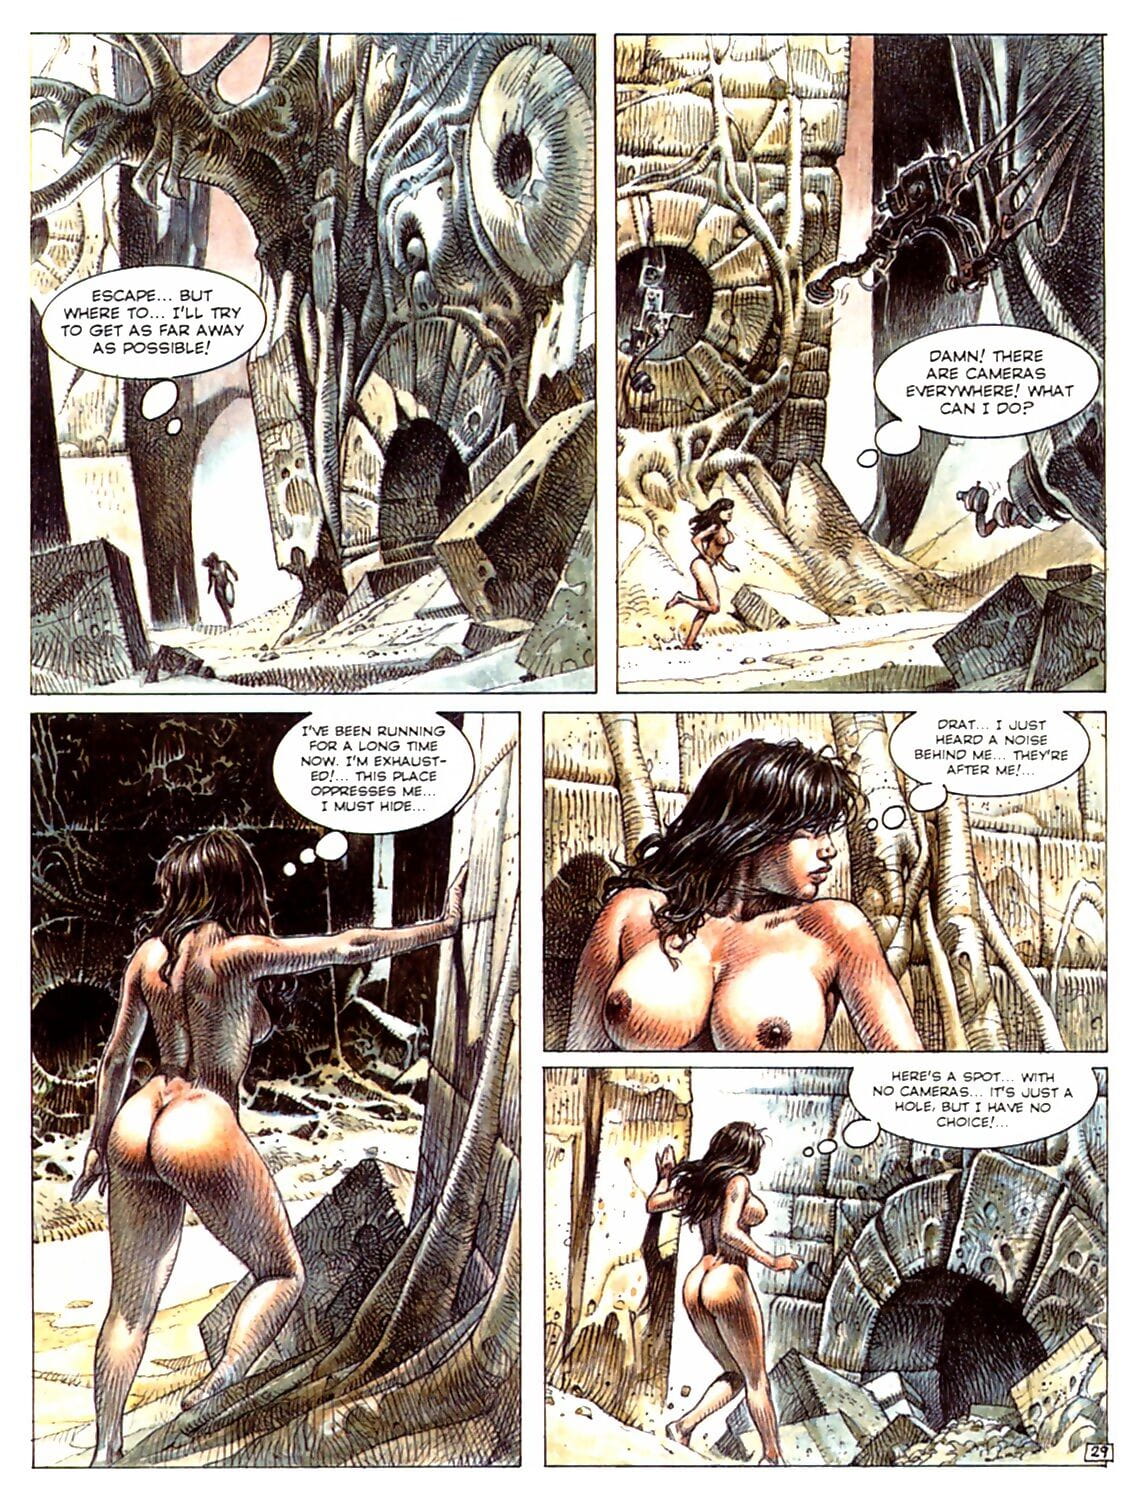 Druuna 7 - The Forgotten Planet page 1